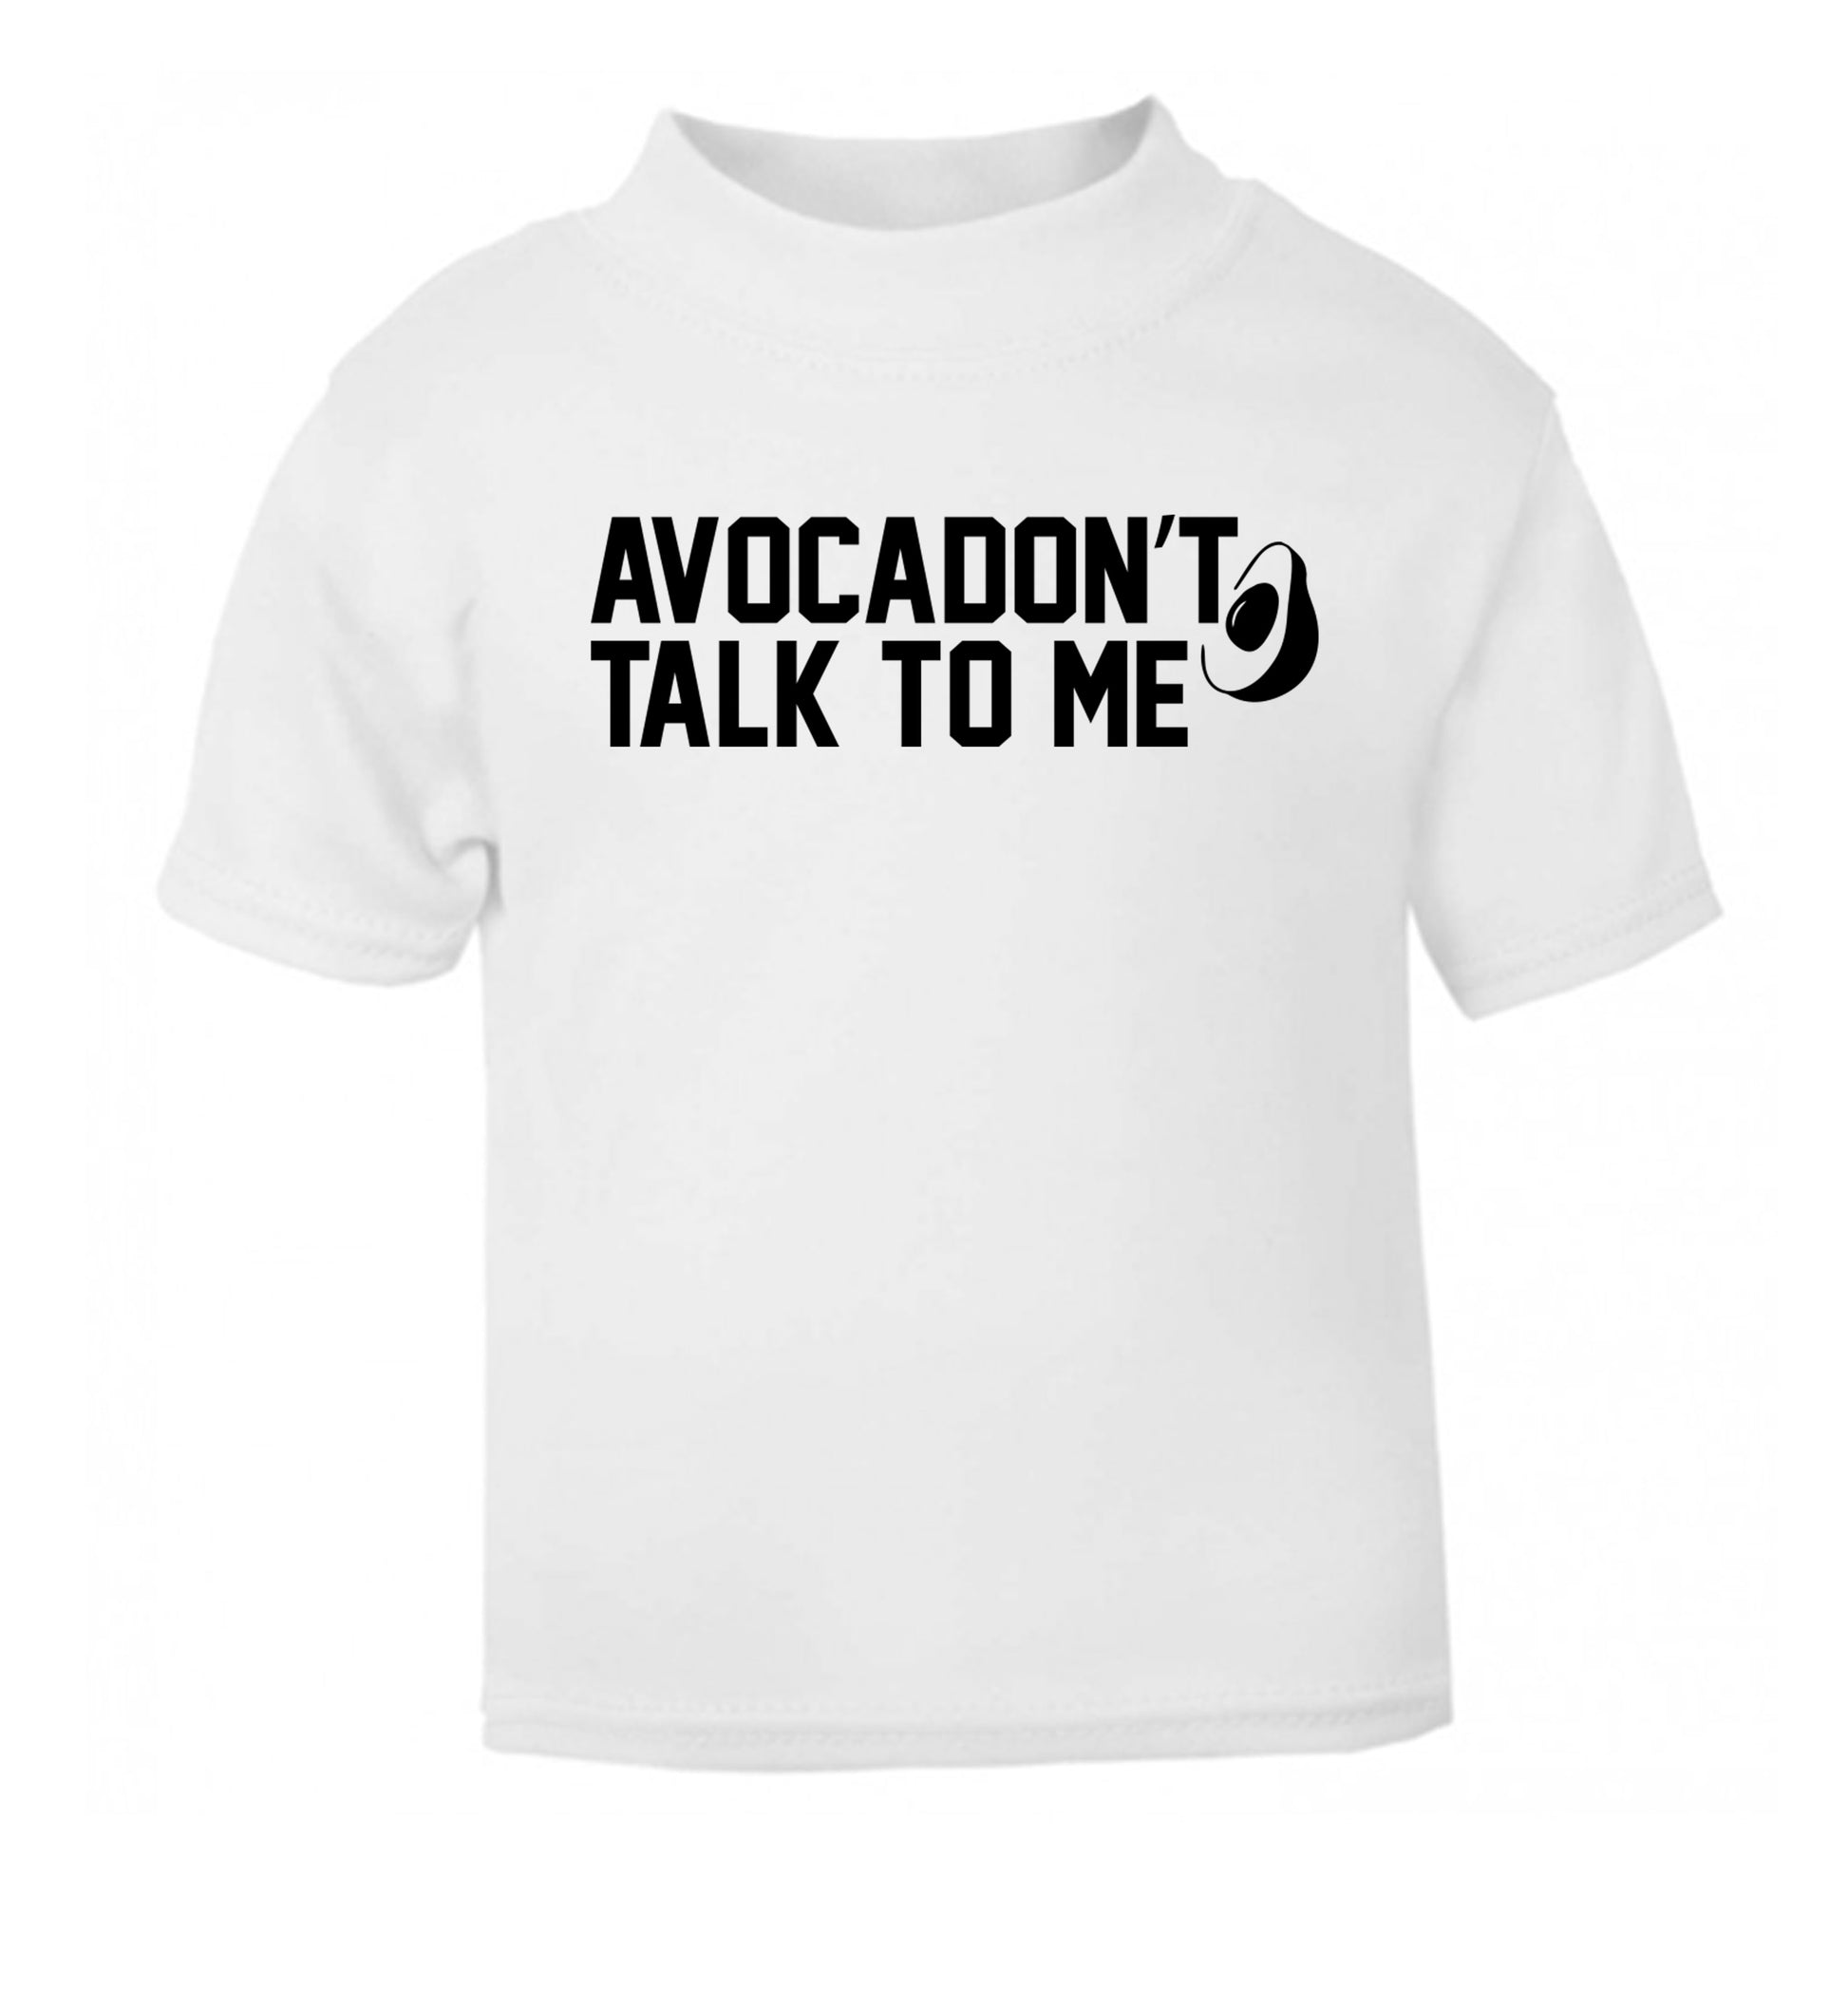 Avocadon't talk to me white Baby Toddler Tshirt 2 Years